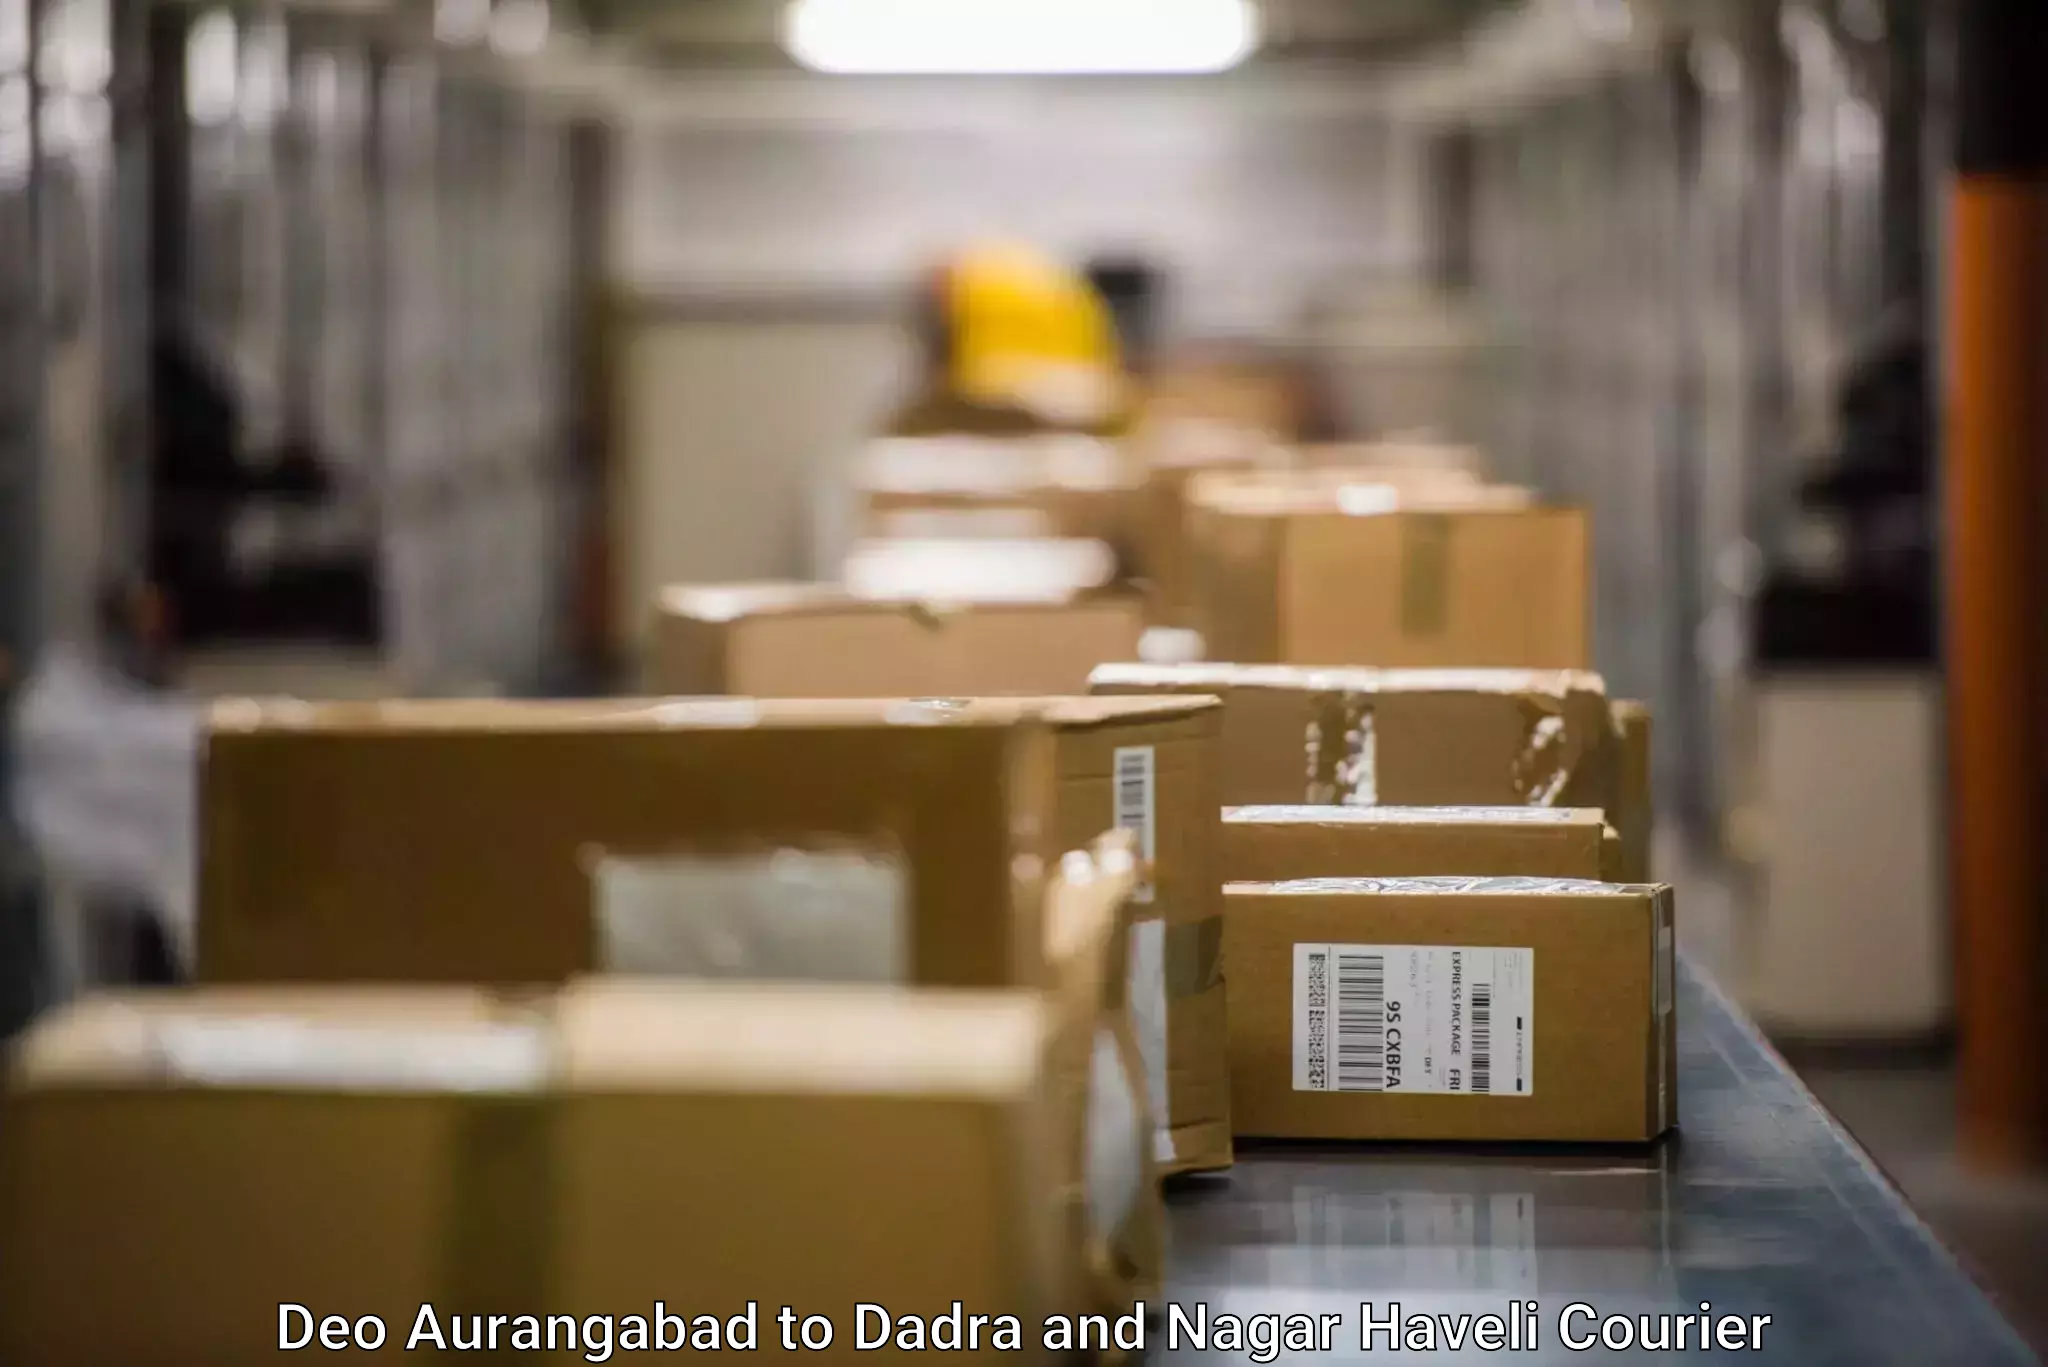 Professional parcel services Deo Aurangabad to Dadra and Nagar Haveli